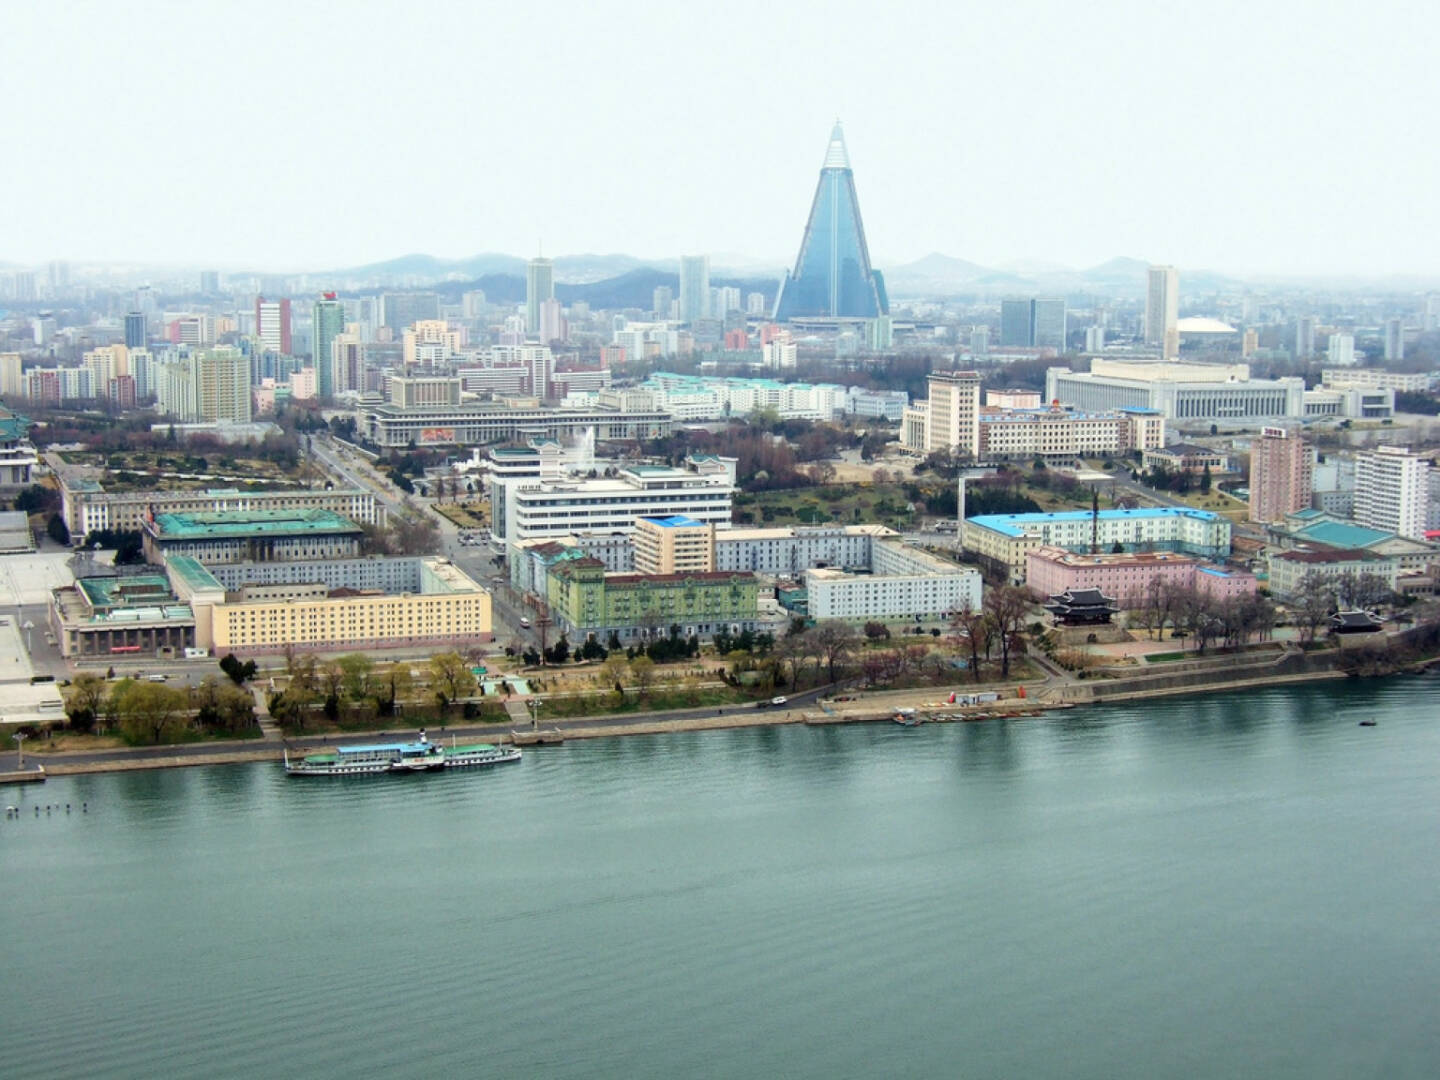 Pjönjang, Nordkorea, http://www.shutterstock.com/de/pic-56118088/stock-photo-view-of-the-pyongyang-capital-of-the-north-korea.html